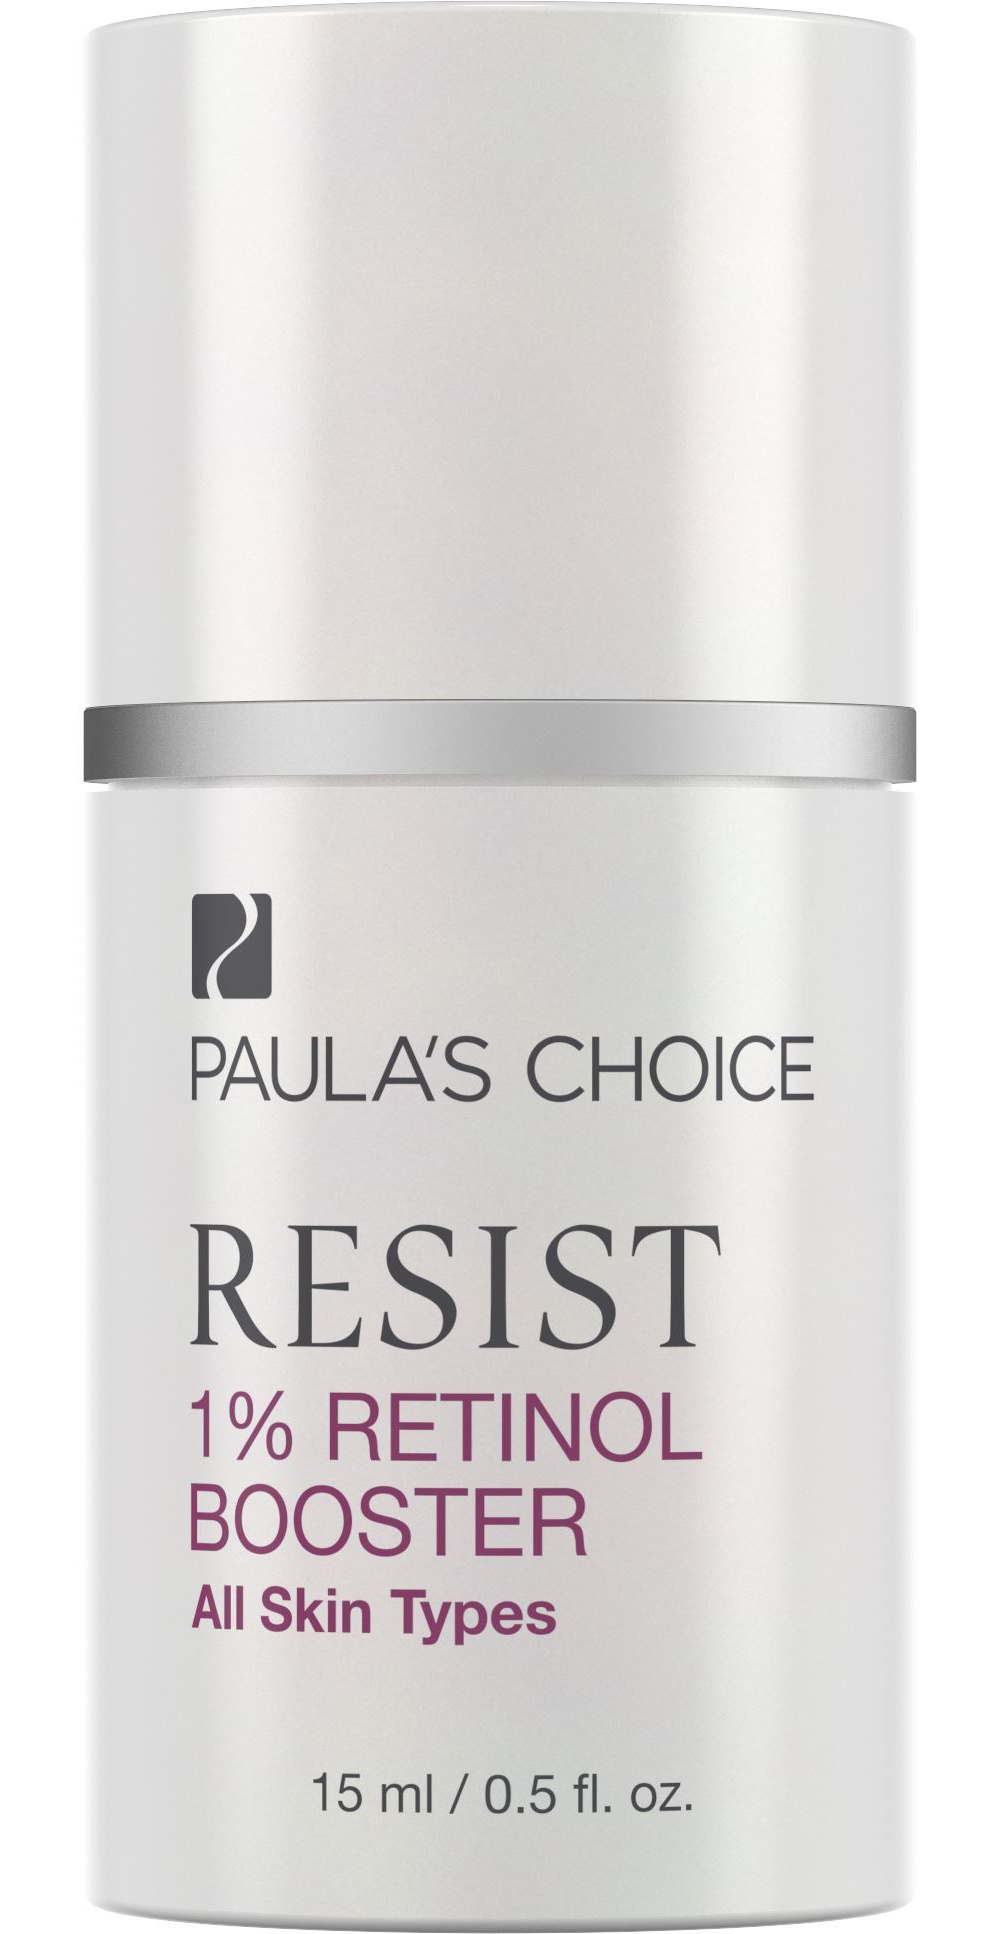 Paula's Choice Resist 1% Retinol Booster